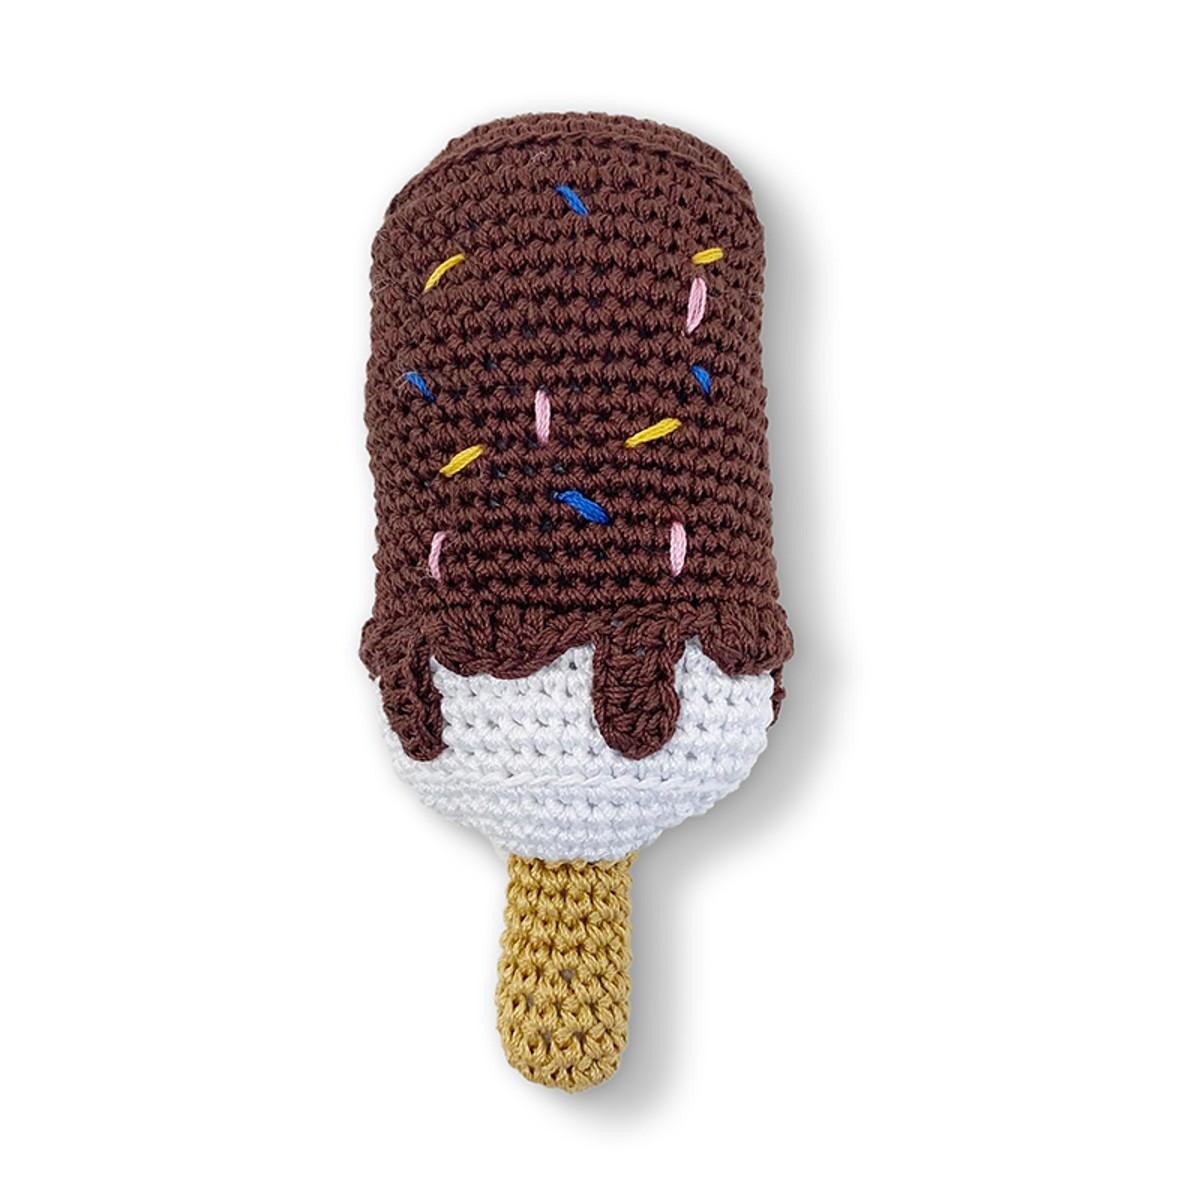 DOGO PAWer Crochet Dog Toy - Chocolate Pop